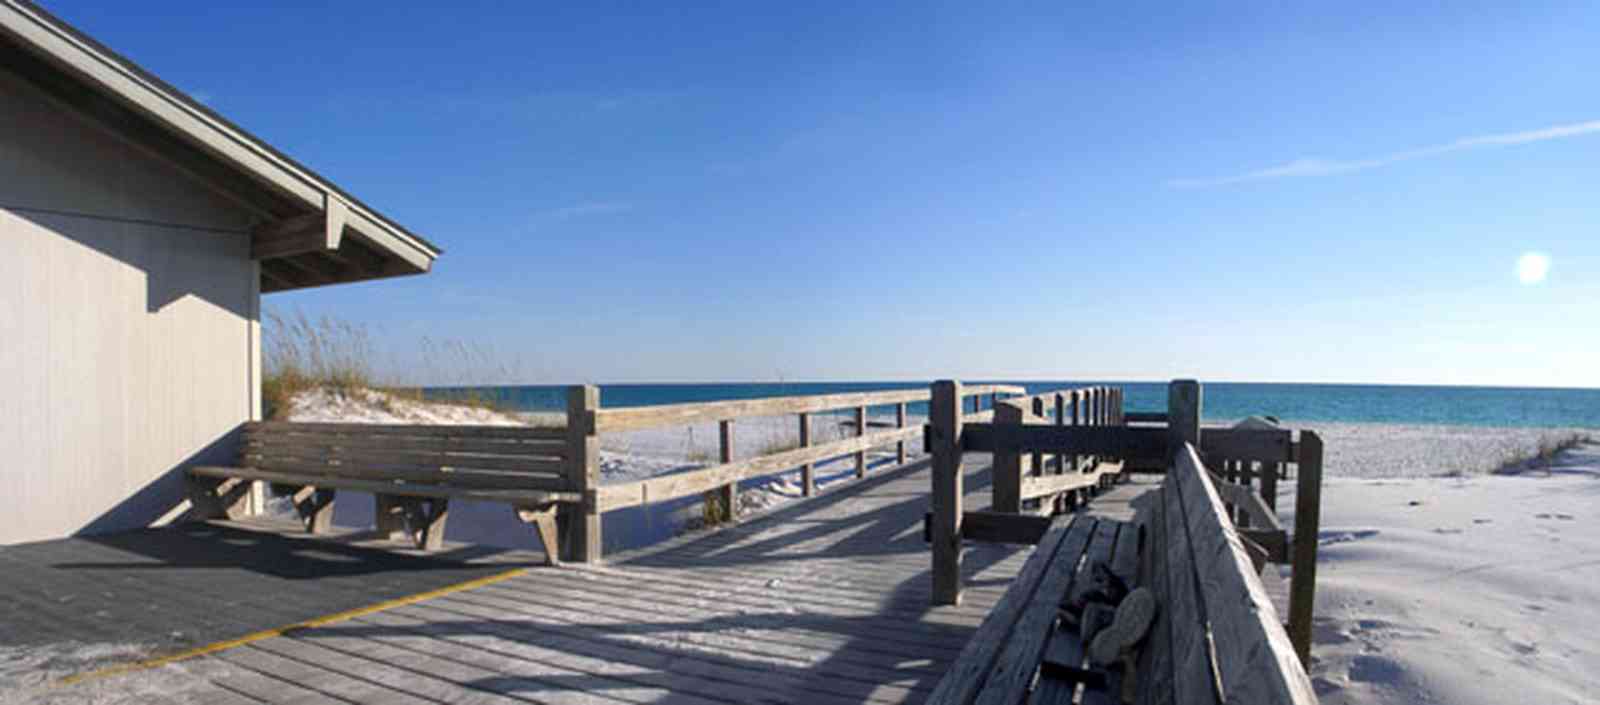 Gulf-Islands-National-Seashore:-Langdon-Beach_05.jpg:  walkover, deck, walkway, path, bench, dunes, gulf of mexico, railings pier, sand, sea oats